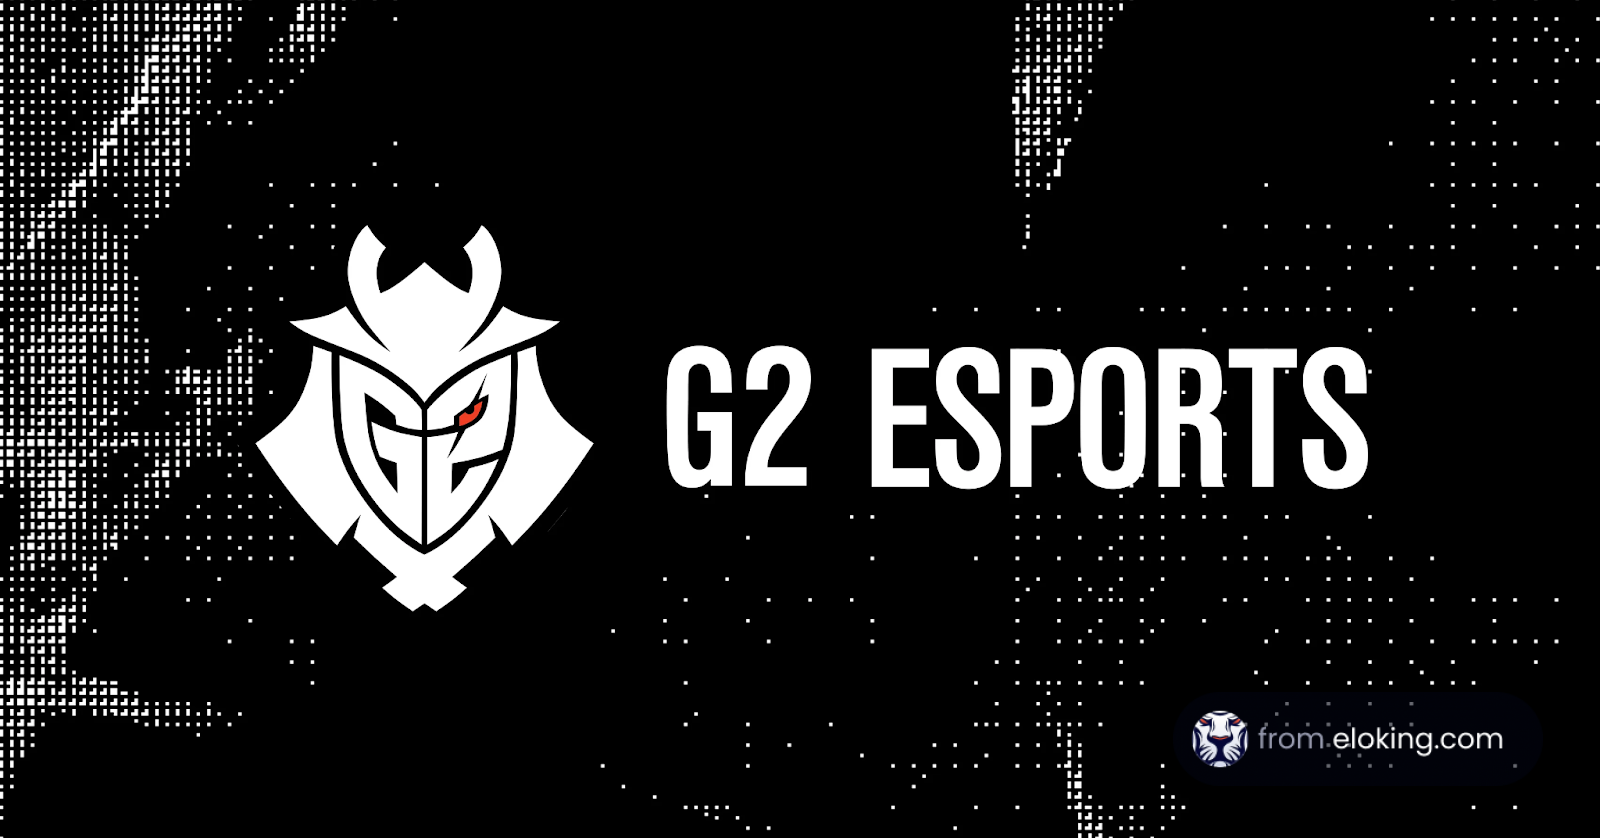 G2 Esports logo on a starry black background